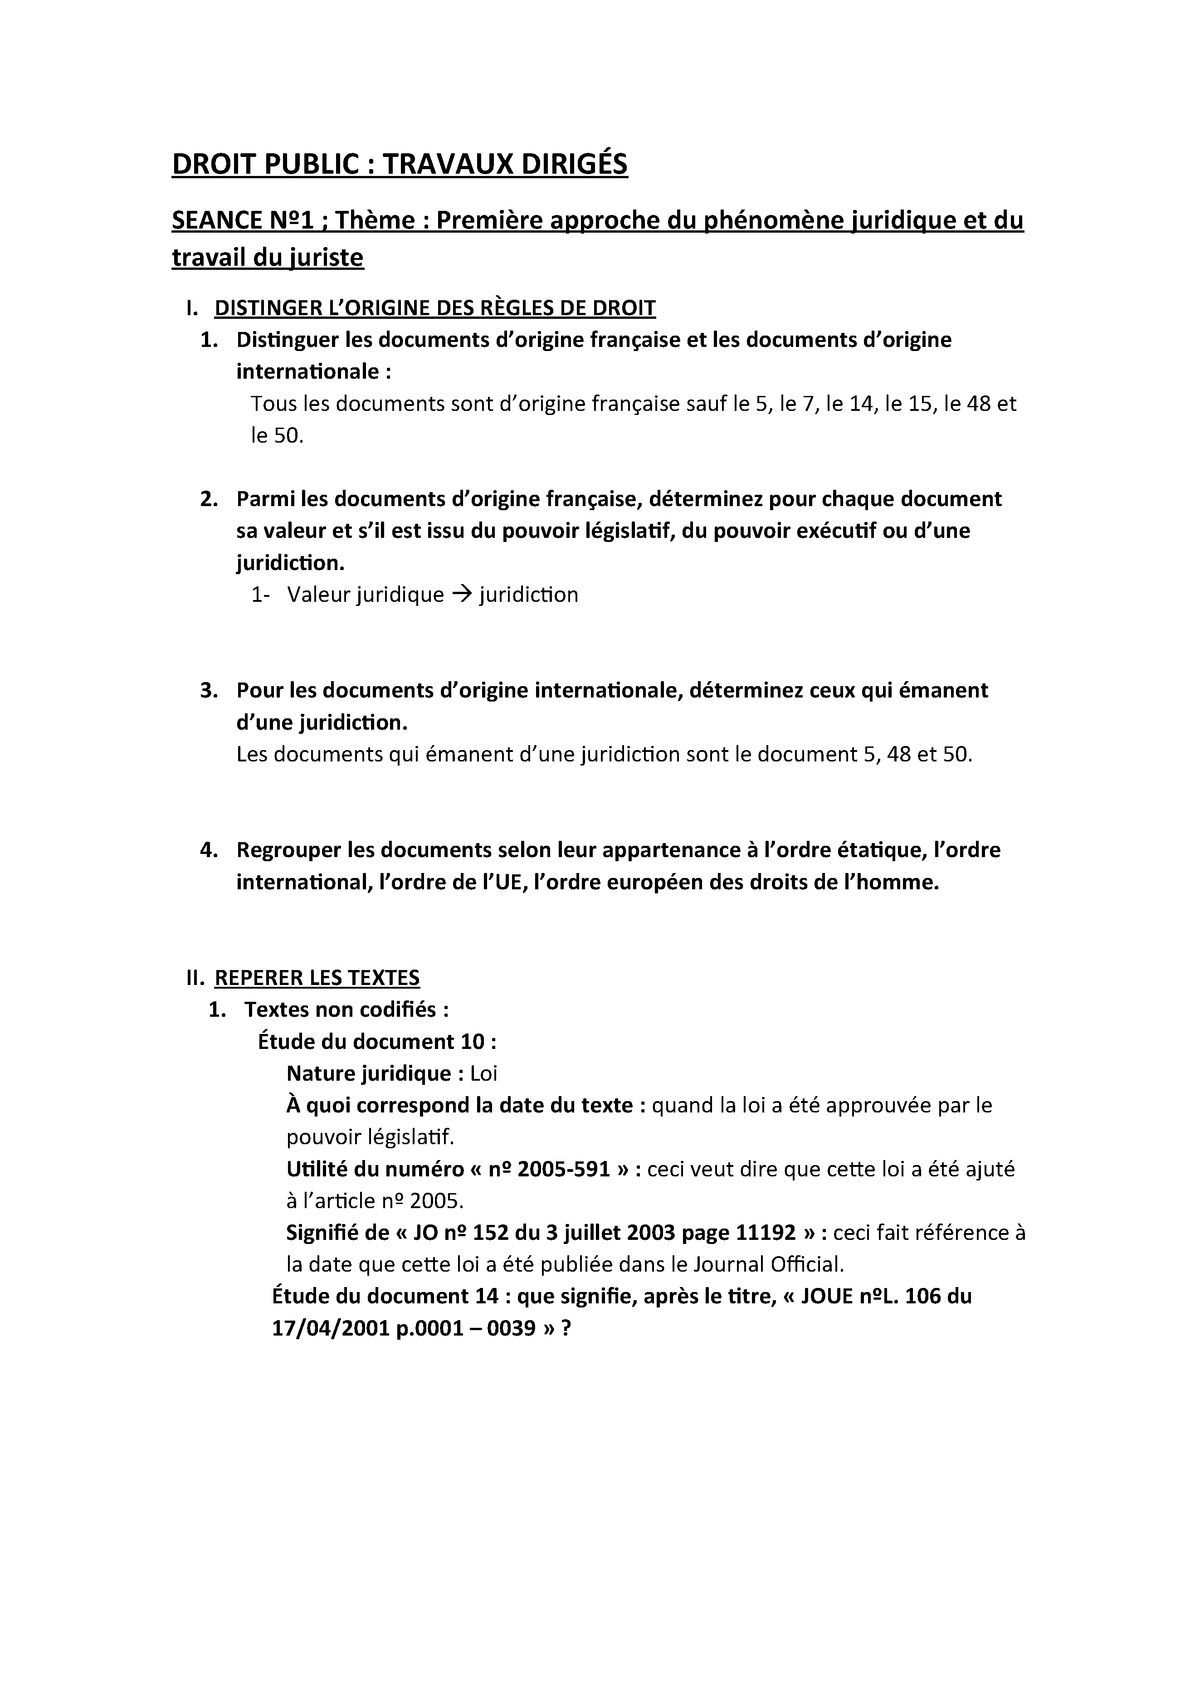 Differentiation homework assignment help